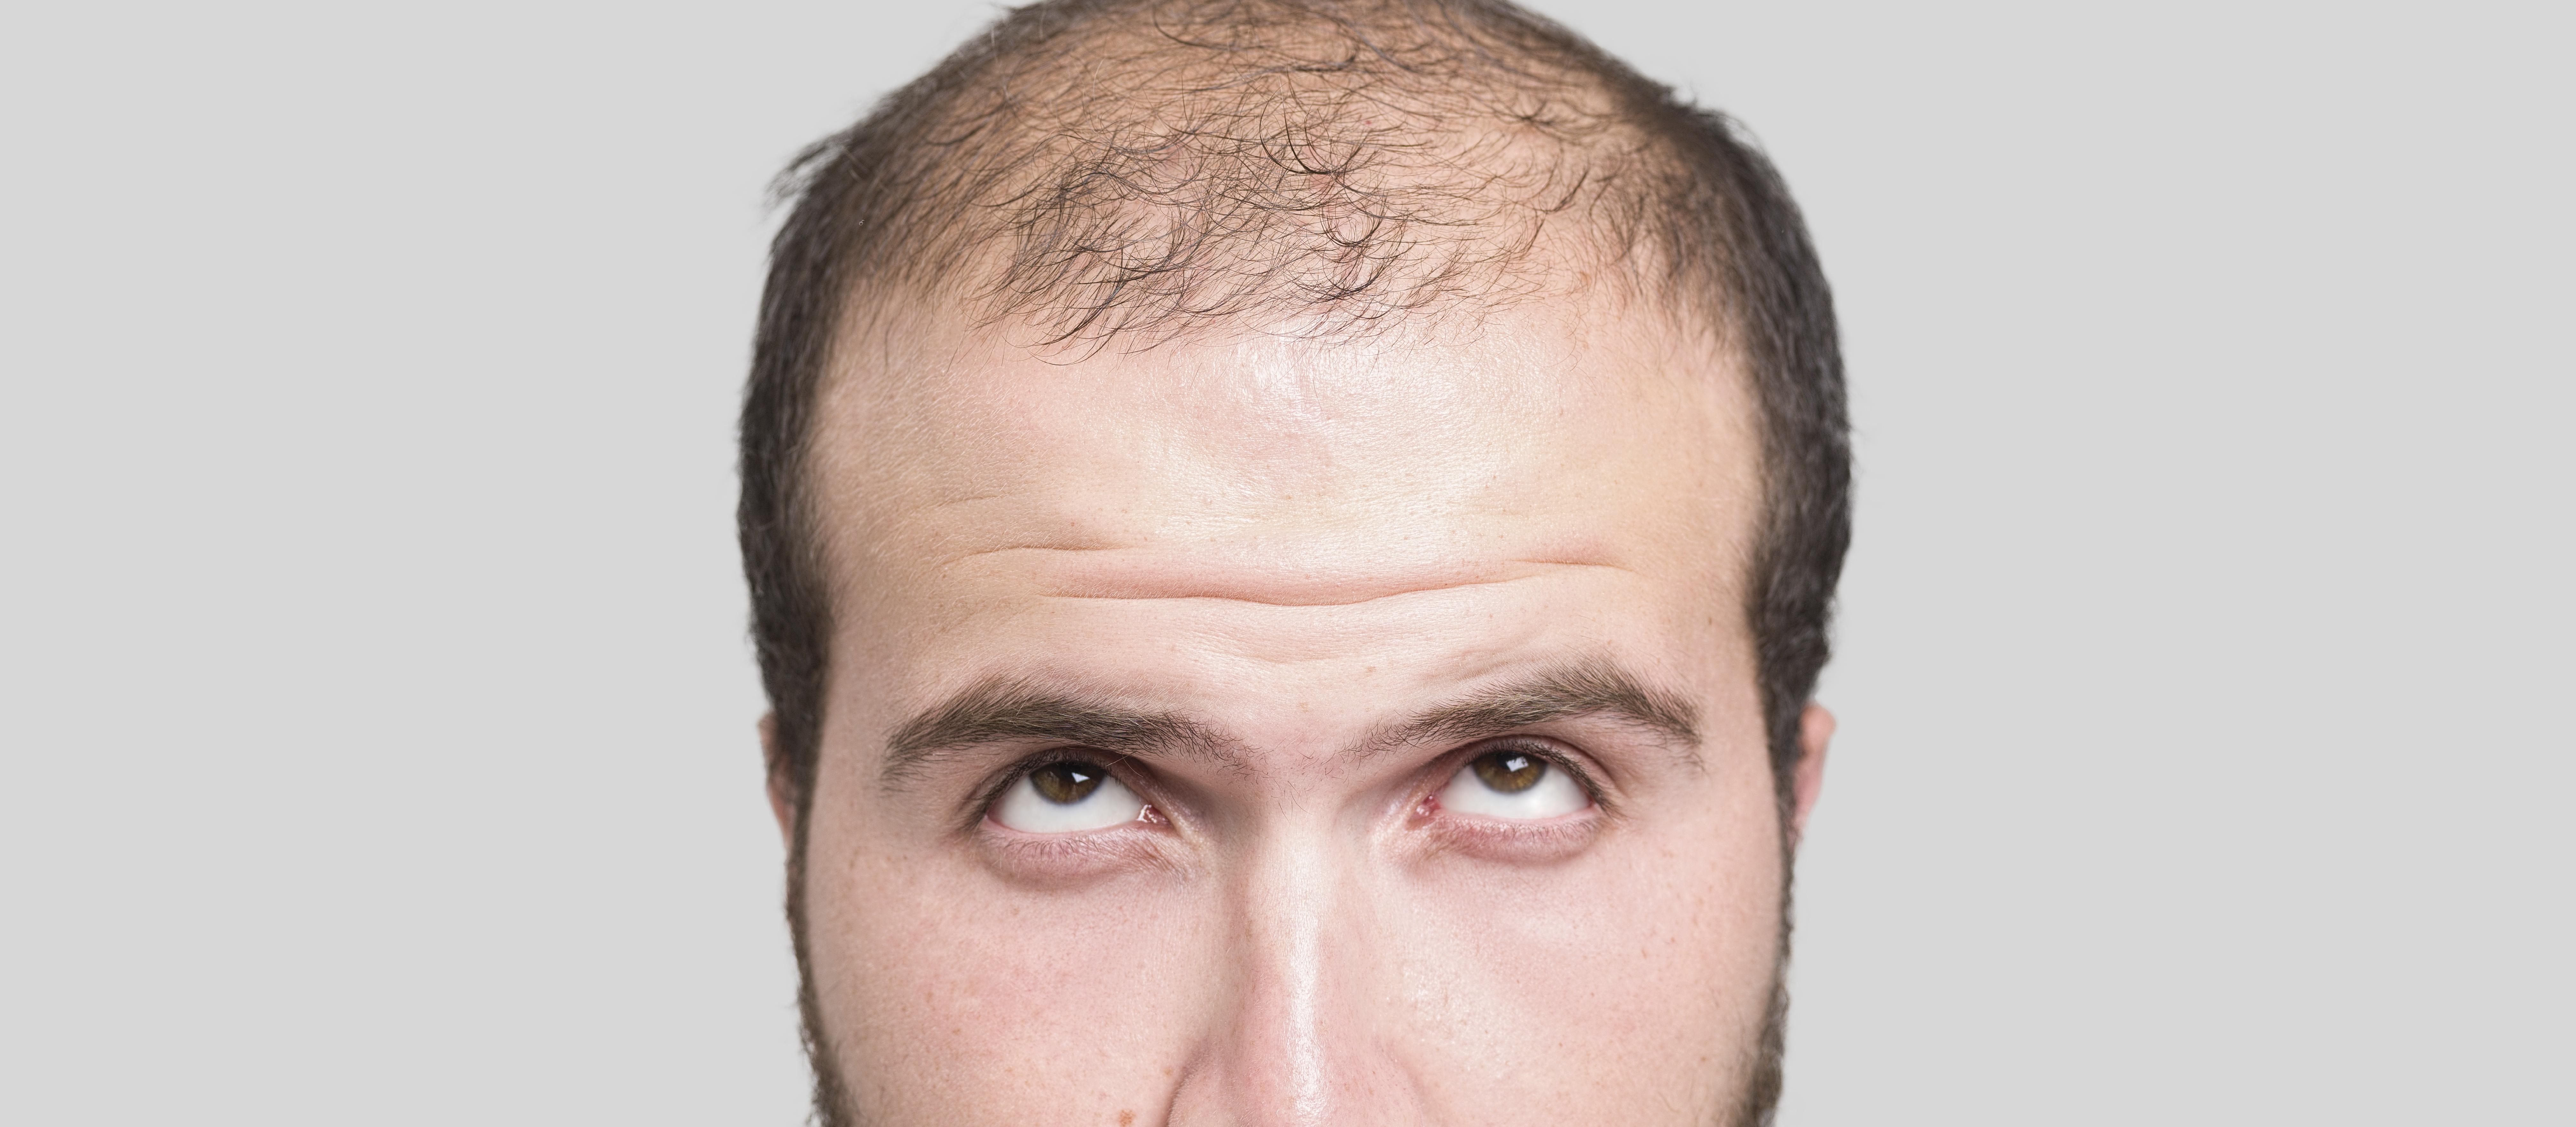 Male baldness